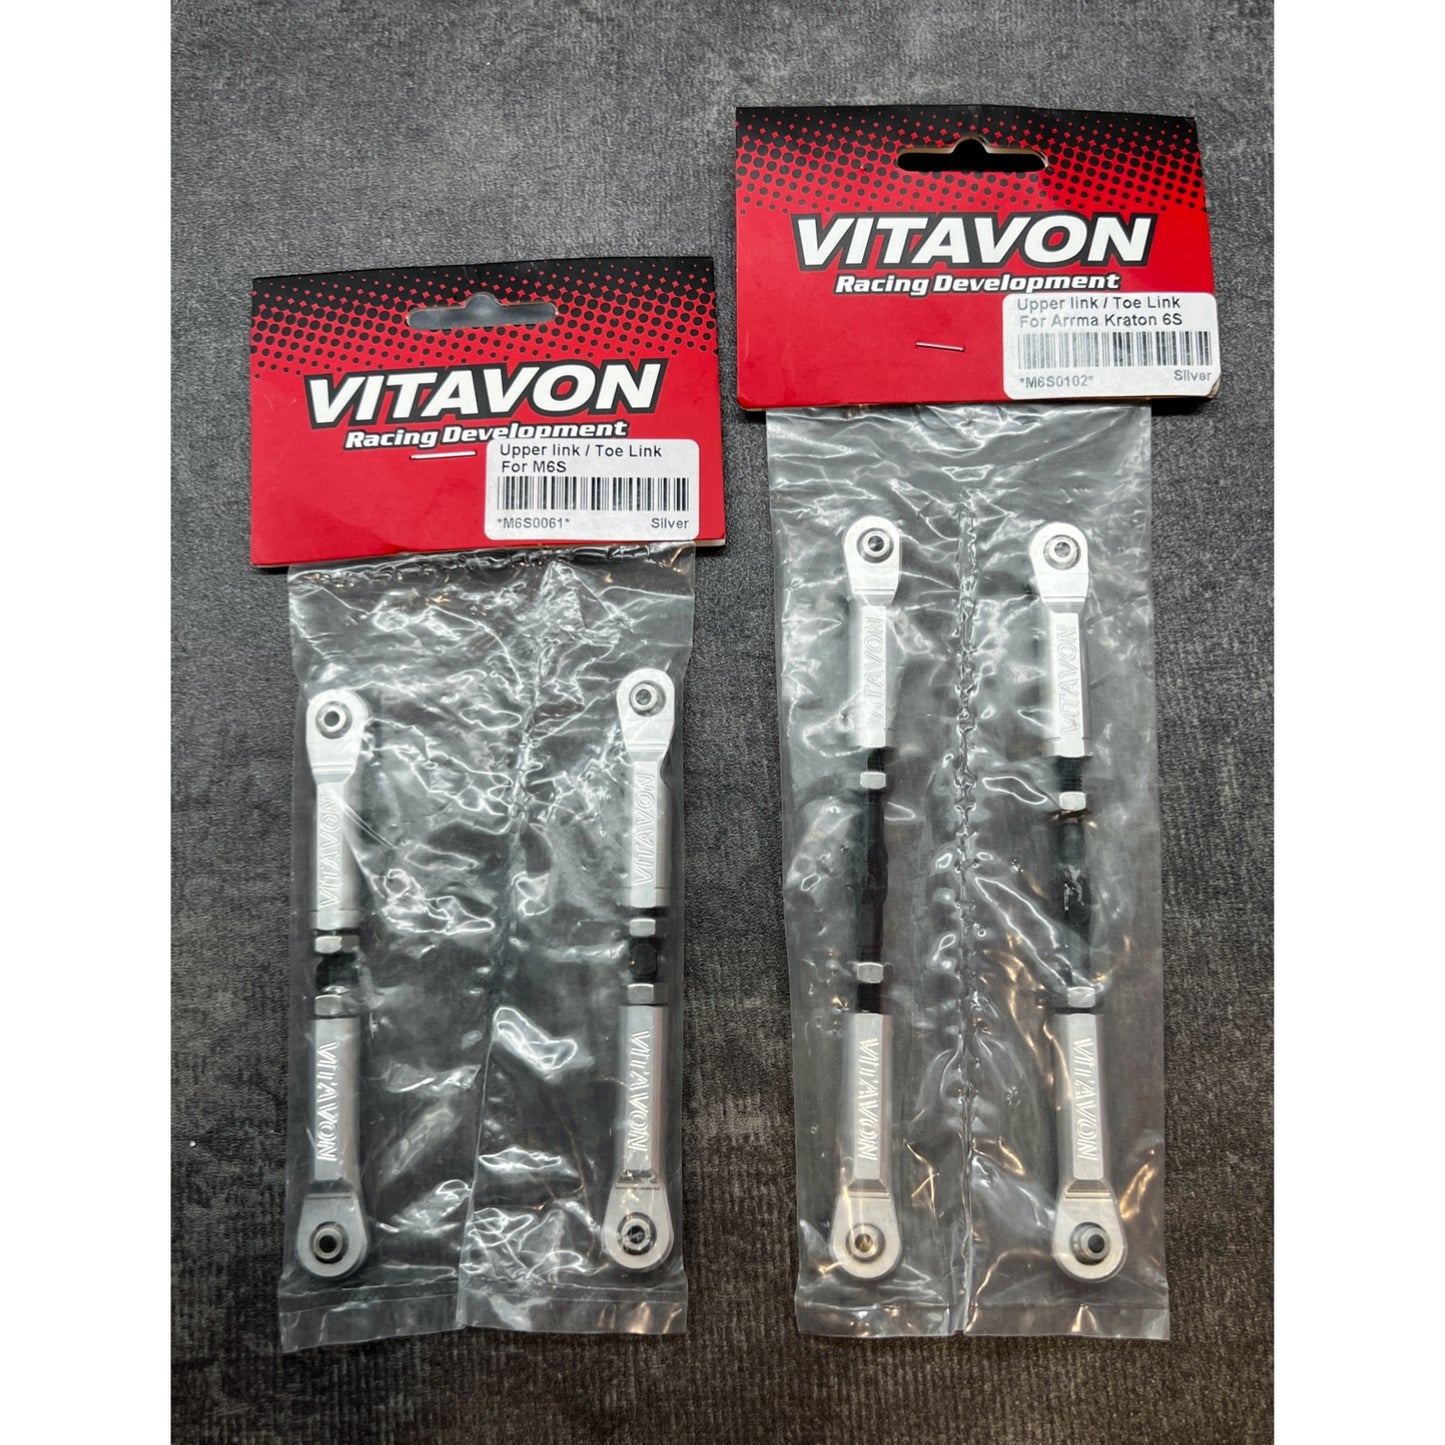 Vitavon 7075 Aluminum Adjustable Camber Link For Arrma Kraton/Outcast/Big rock/Notorious